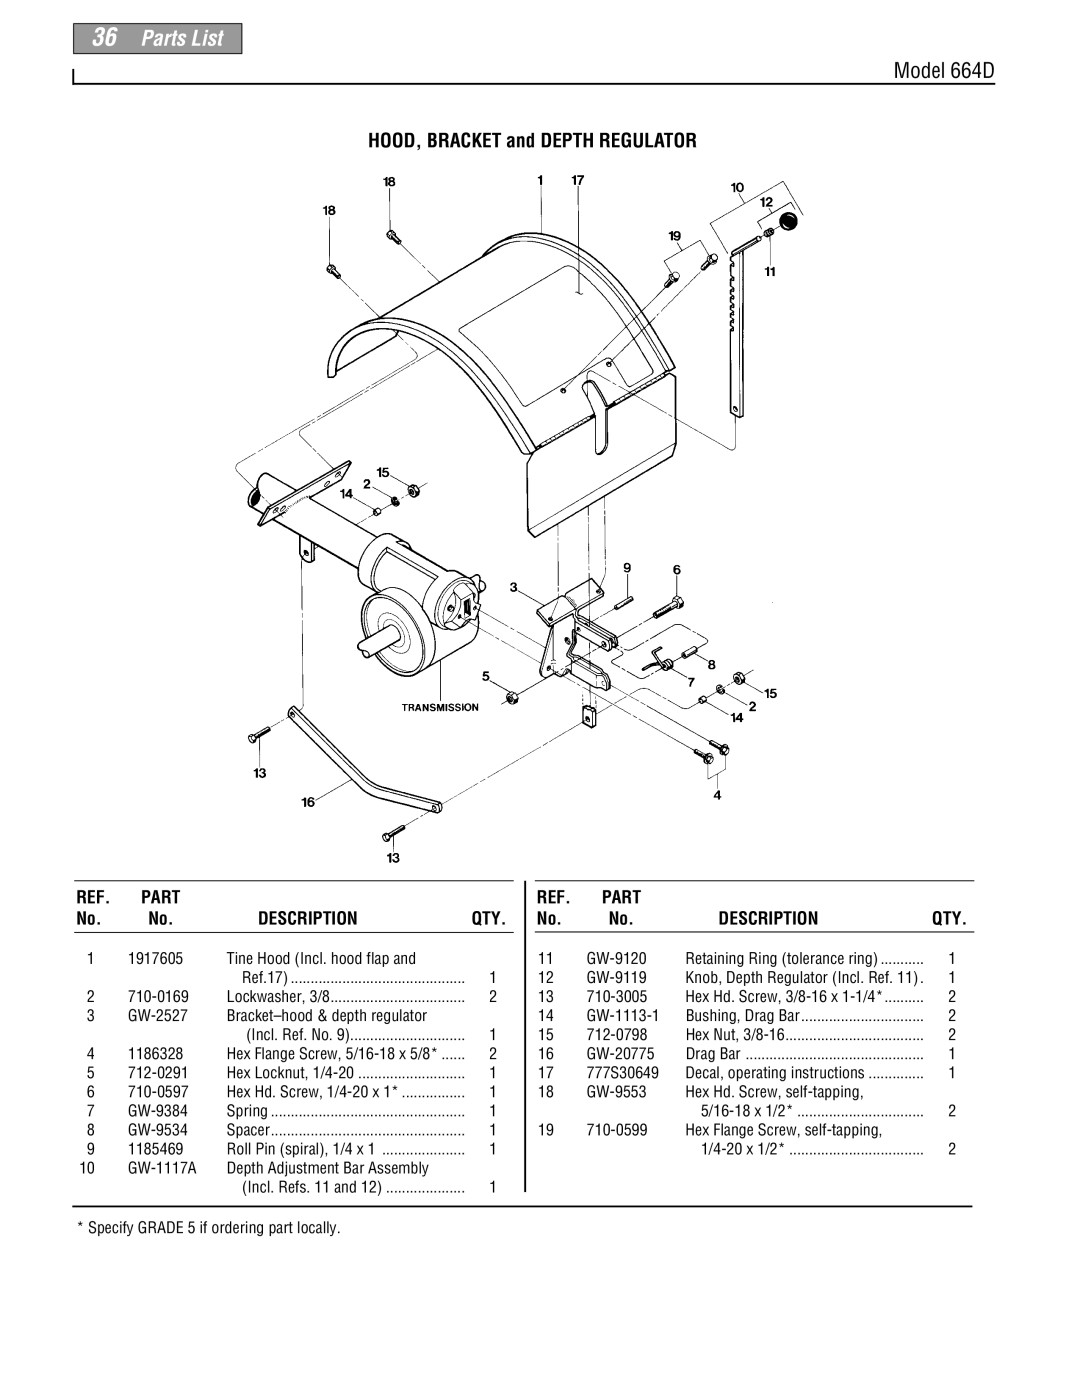 Troy-Bilt 664D-Pony manual Parts List, HOOD, BRACKET and DEPTH REGULATOR, Model 664D, Description 